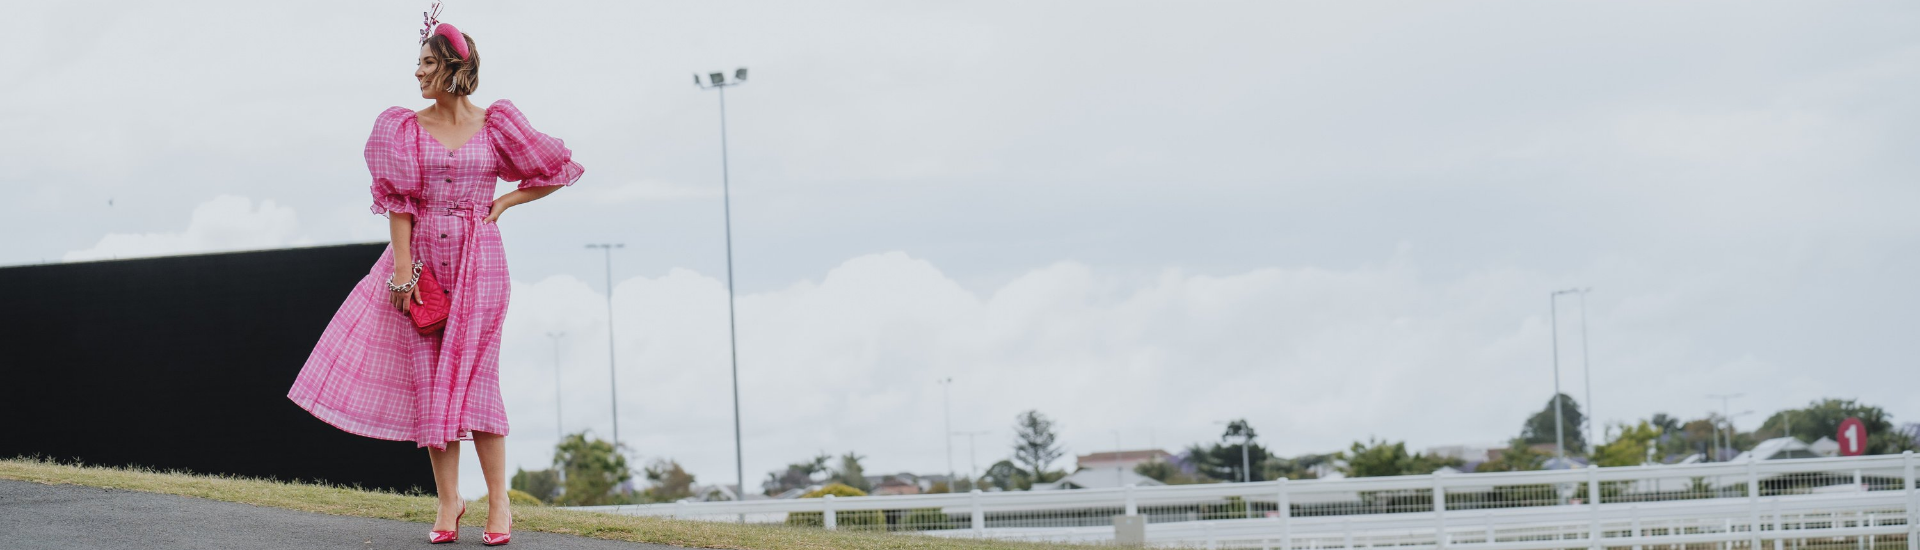 Kerri Carucci - Melbourne Cup Day Web Banner | Brisbane Racing Club